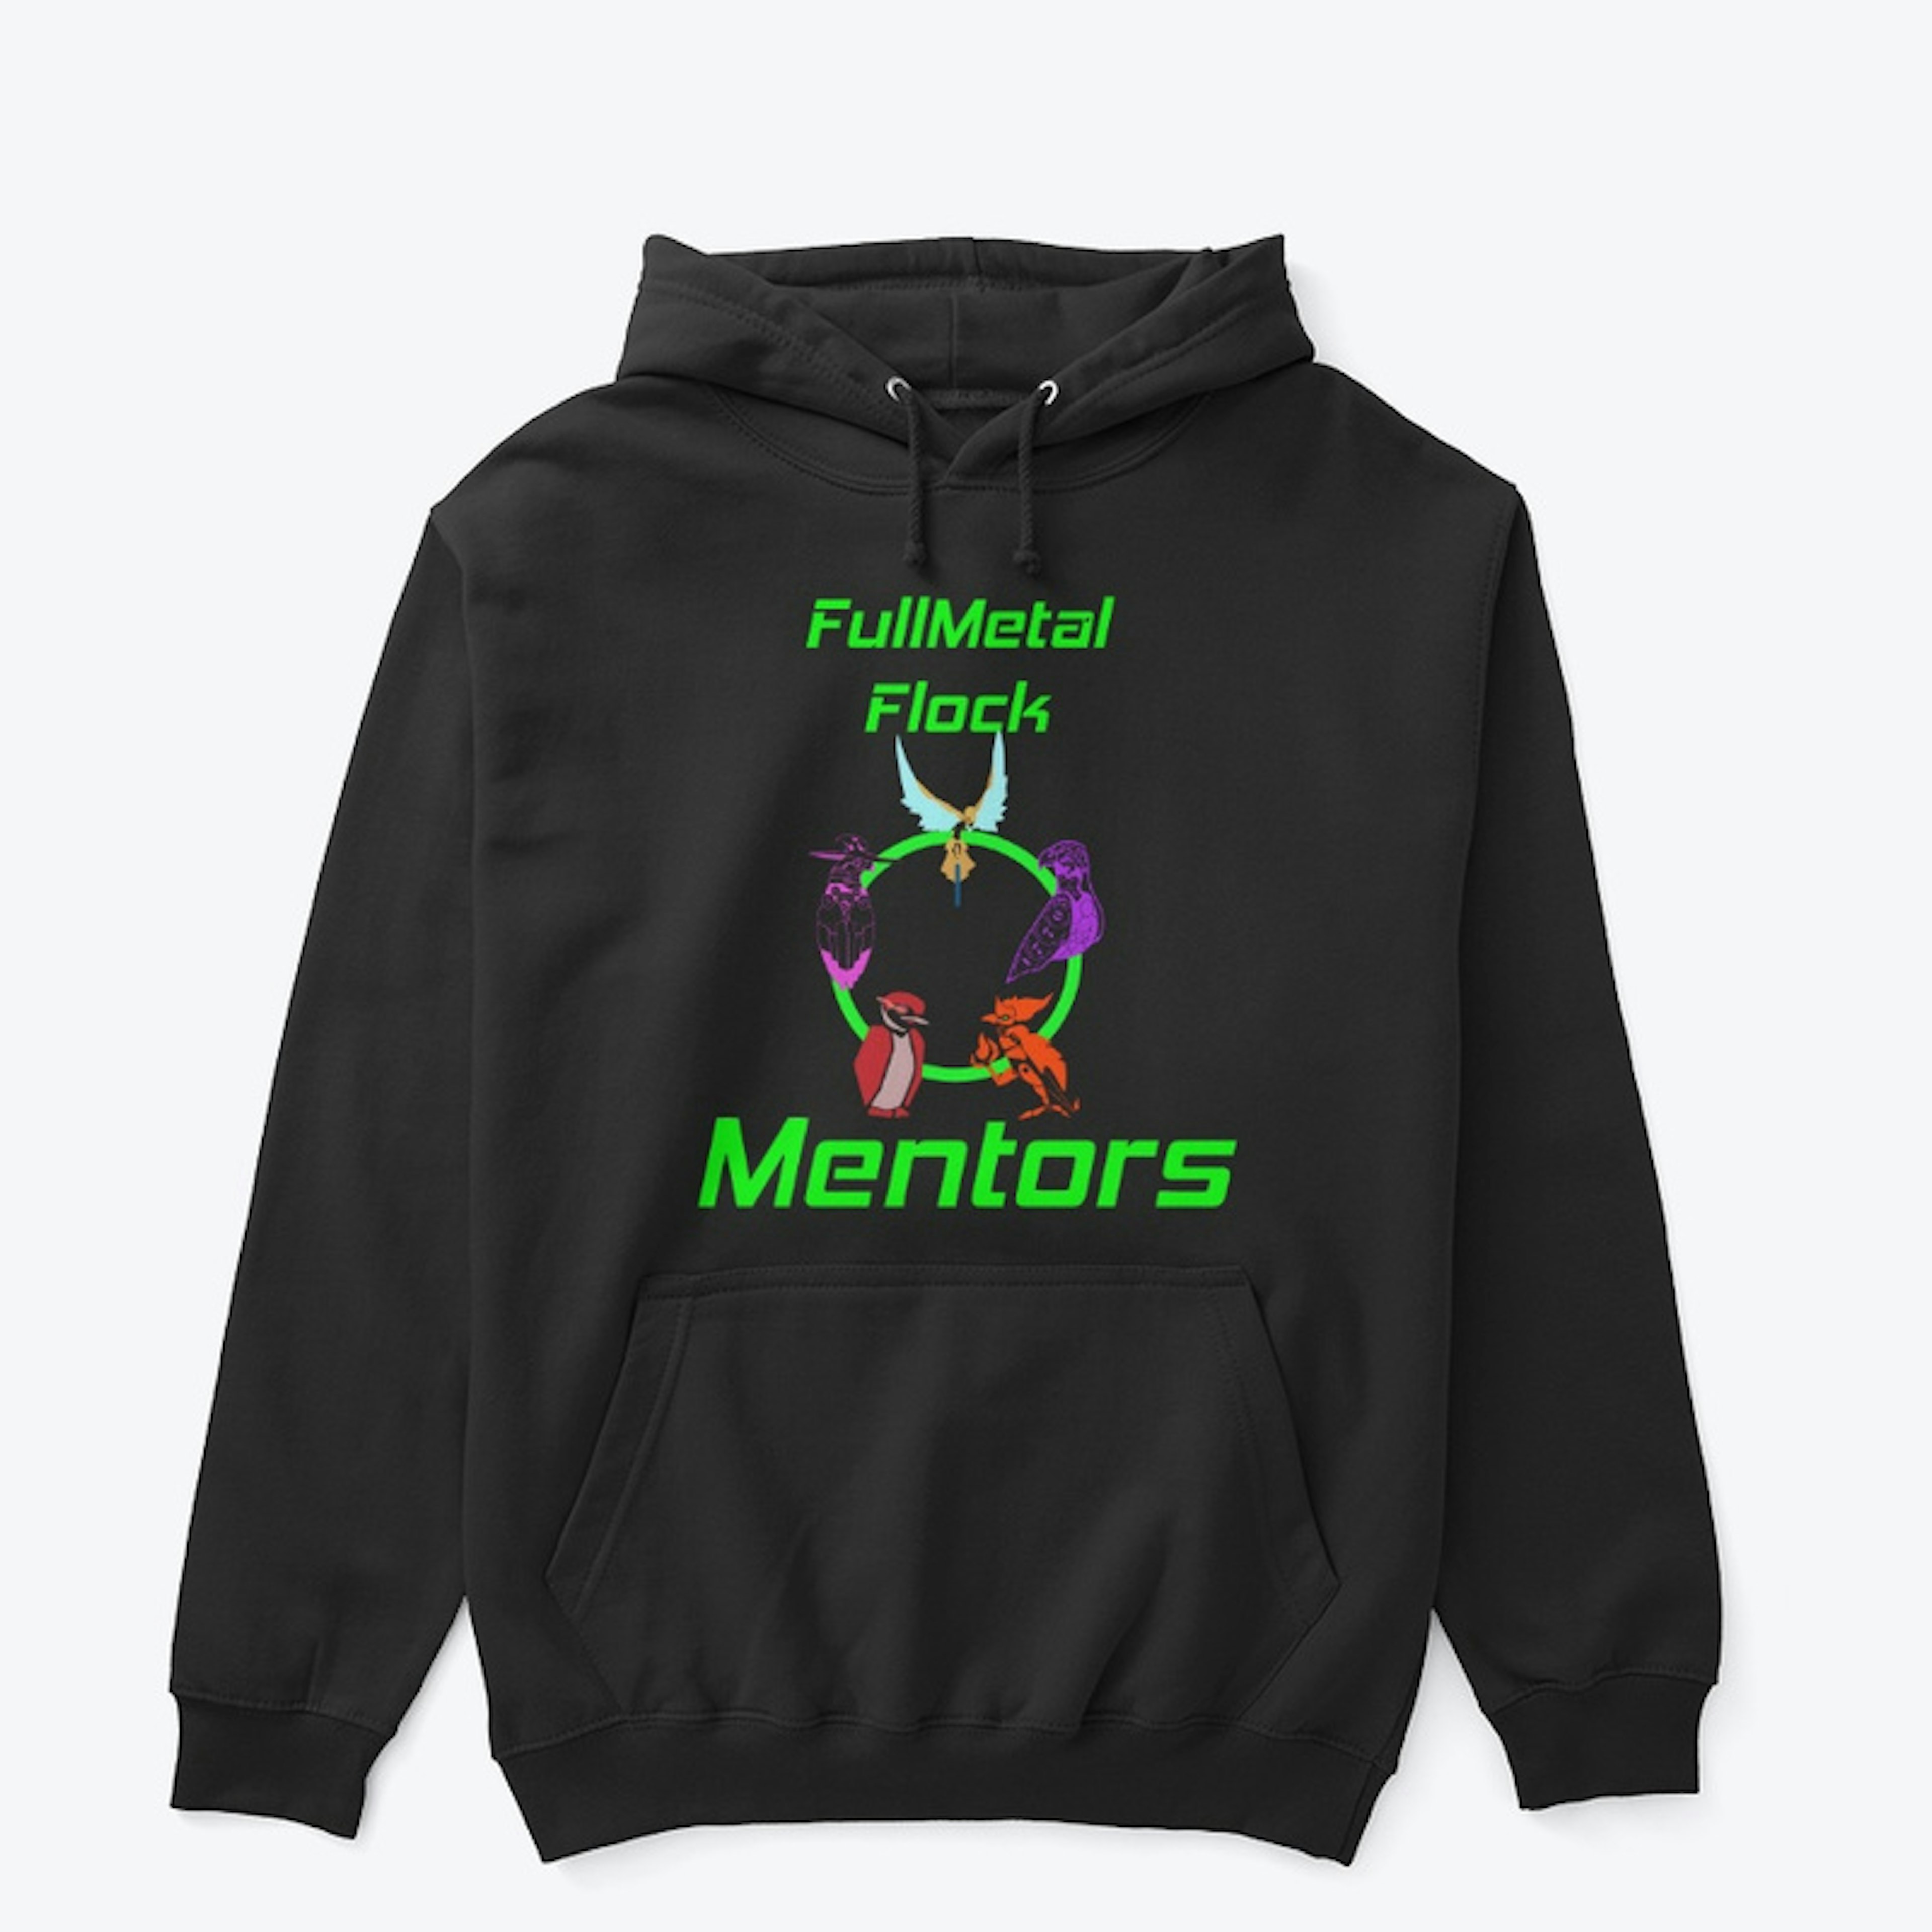 FullMetal Flock Mentors Sweatshirt